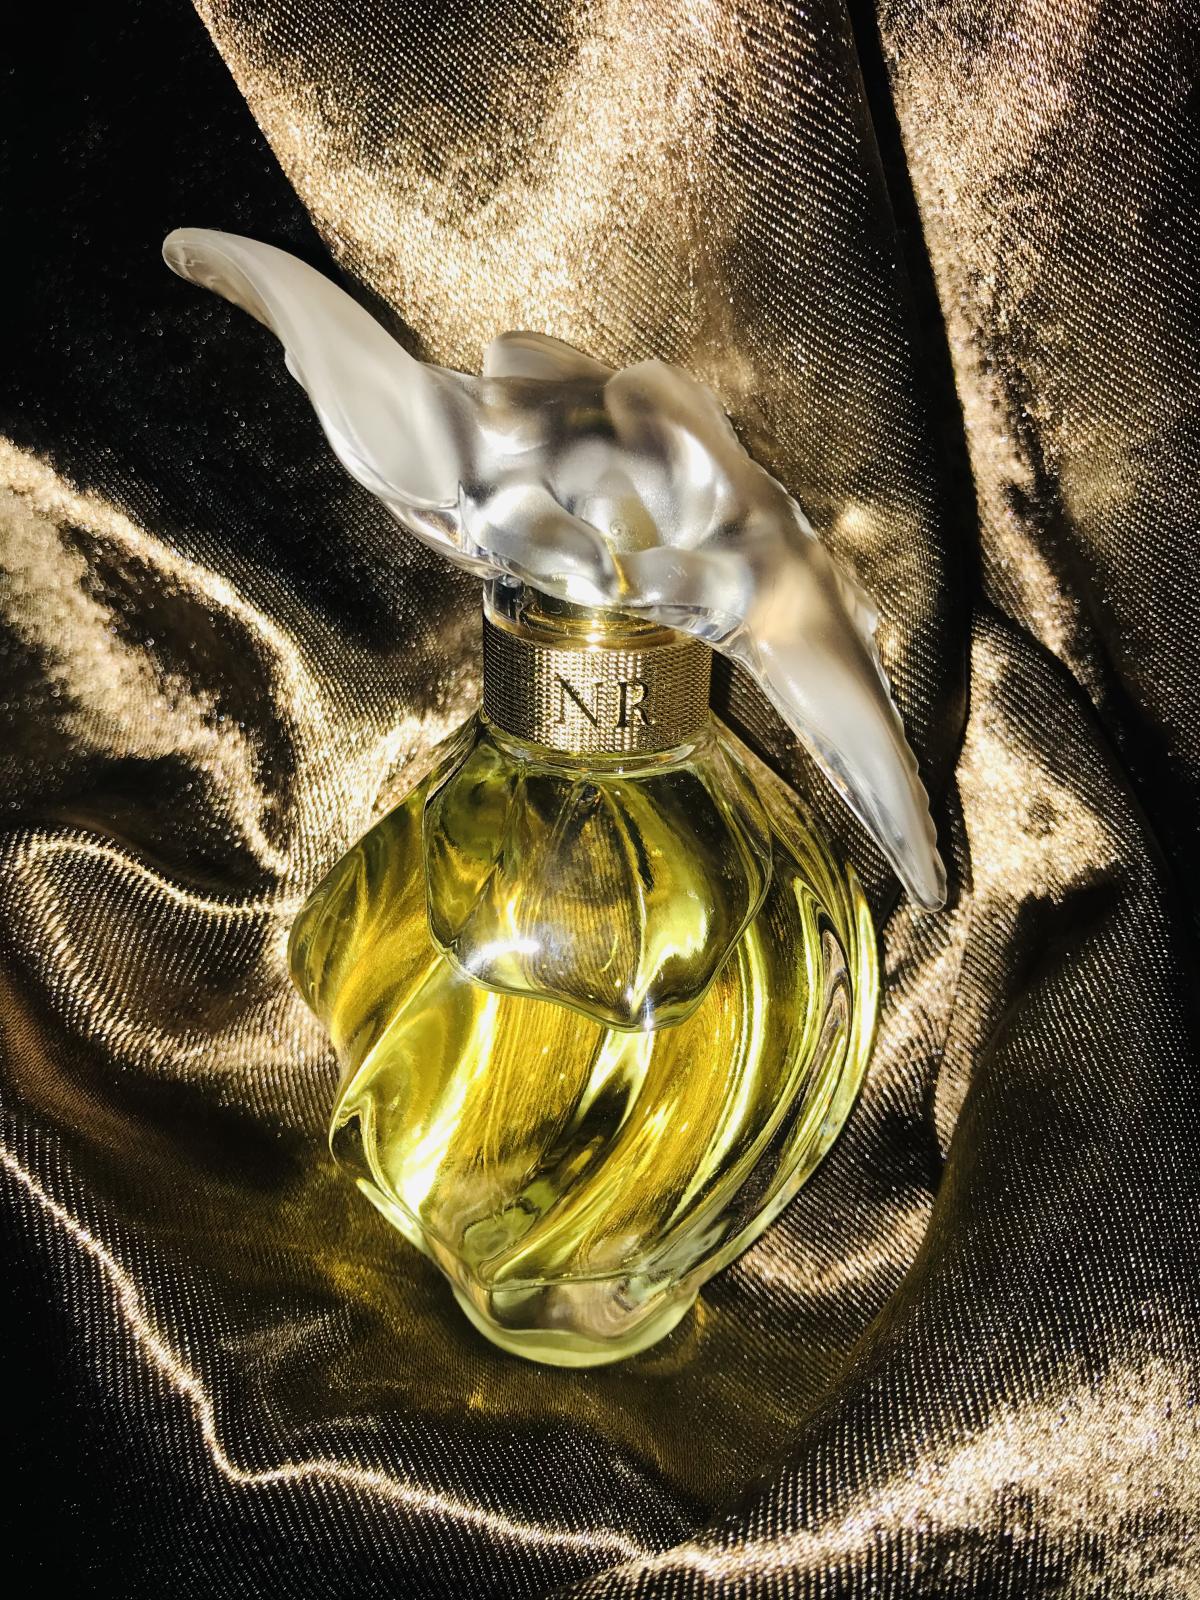 L'Air du Temps Nina Ricci perfume - a fragrance for women 1948